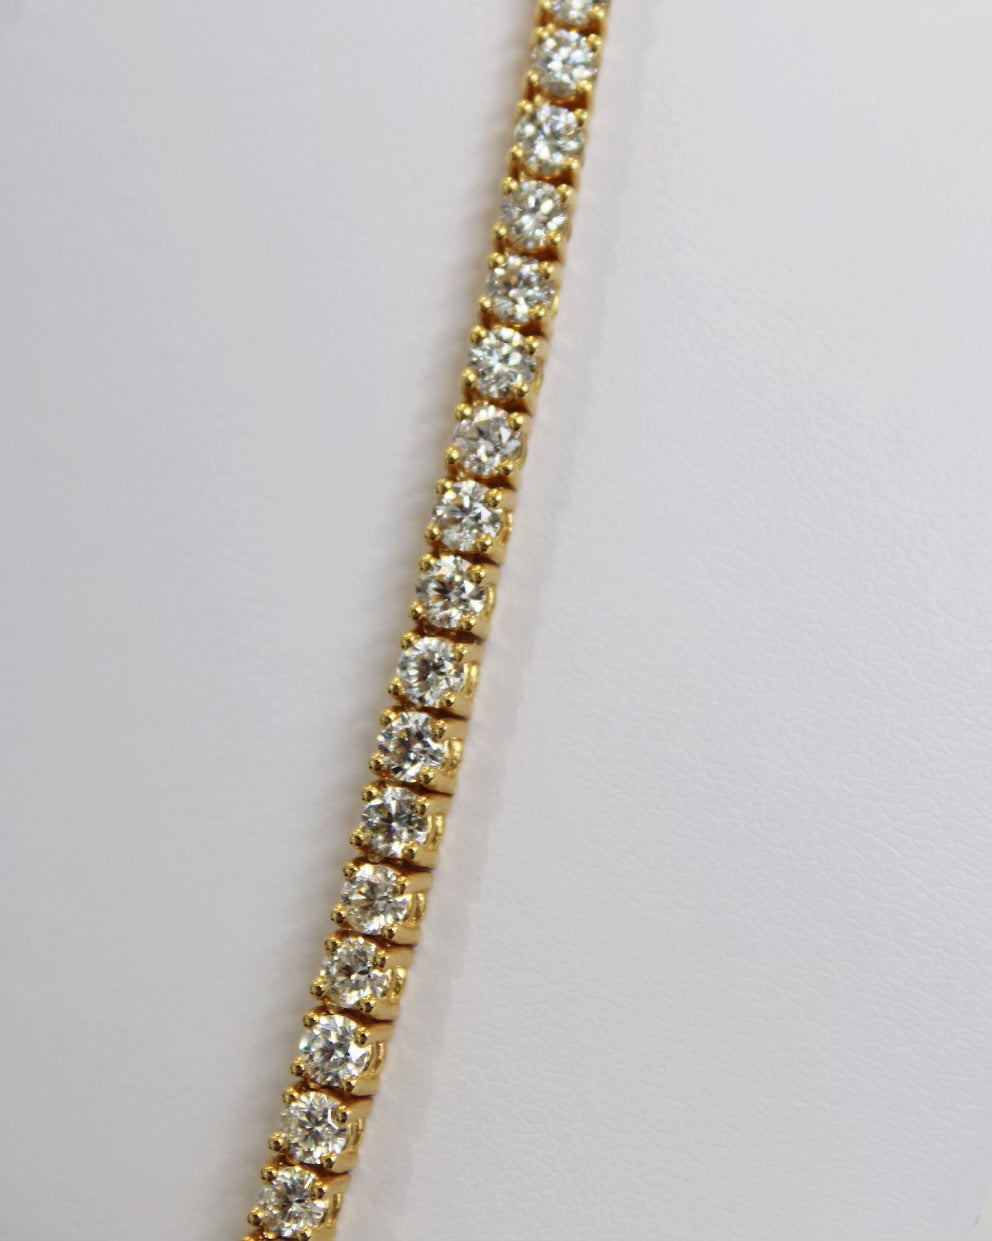 14k Yellow Gold 21" 23.50ctw Diamond Tennis Necklace